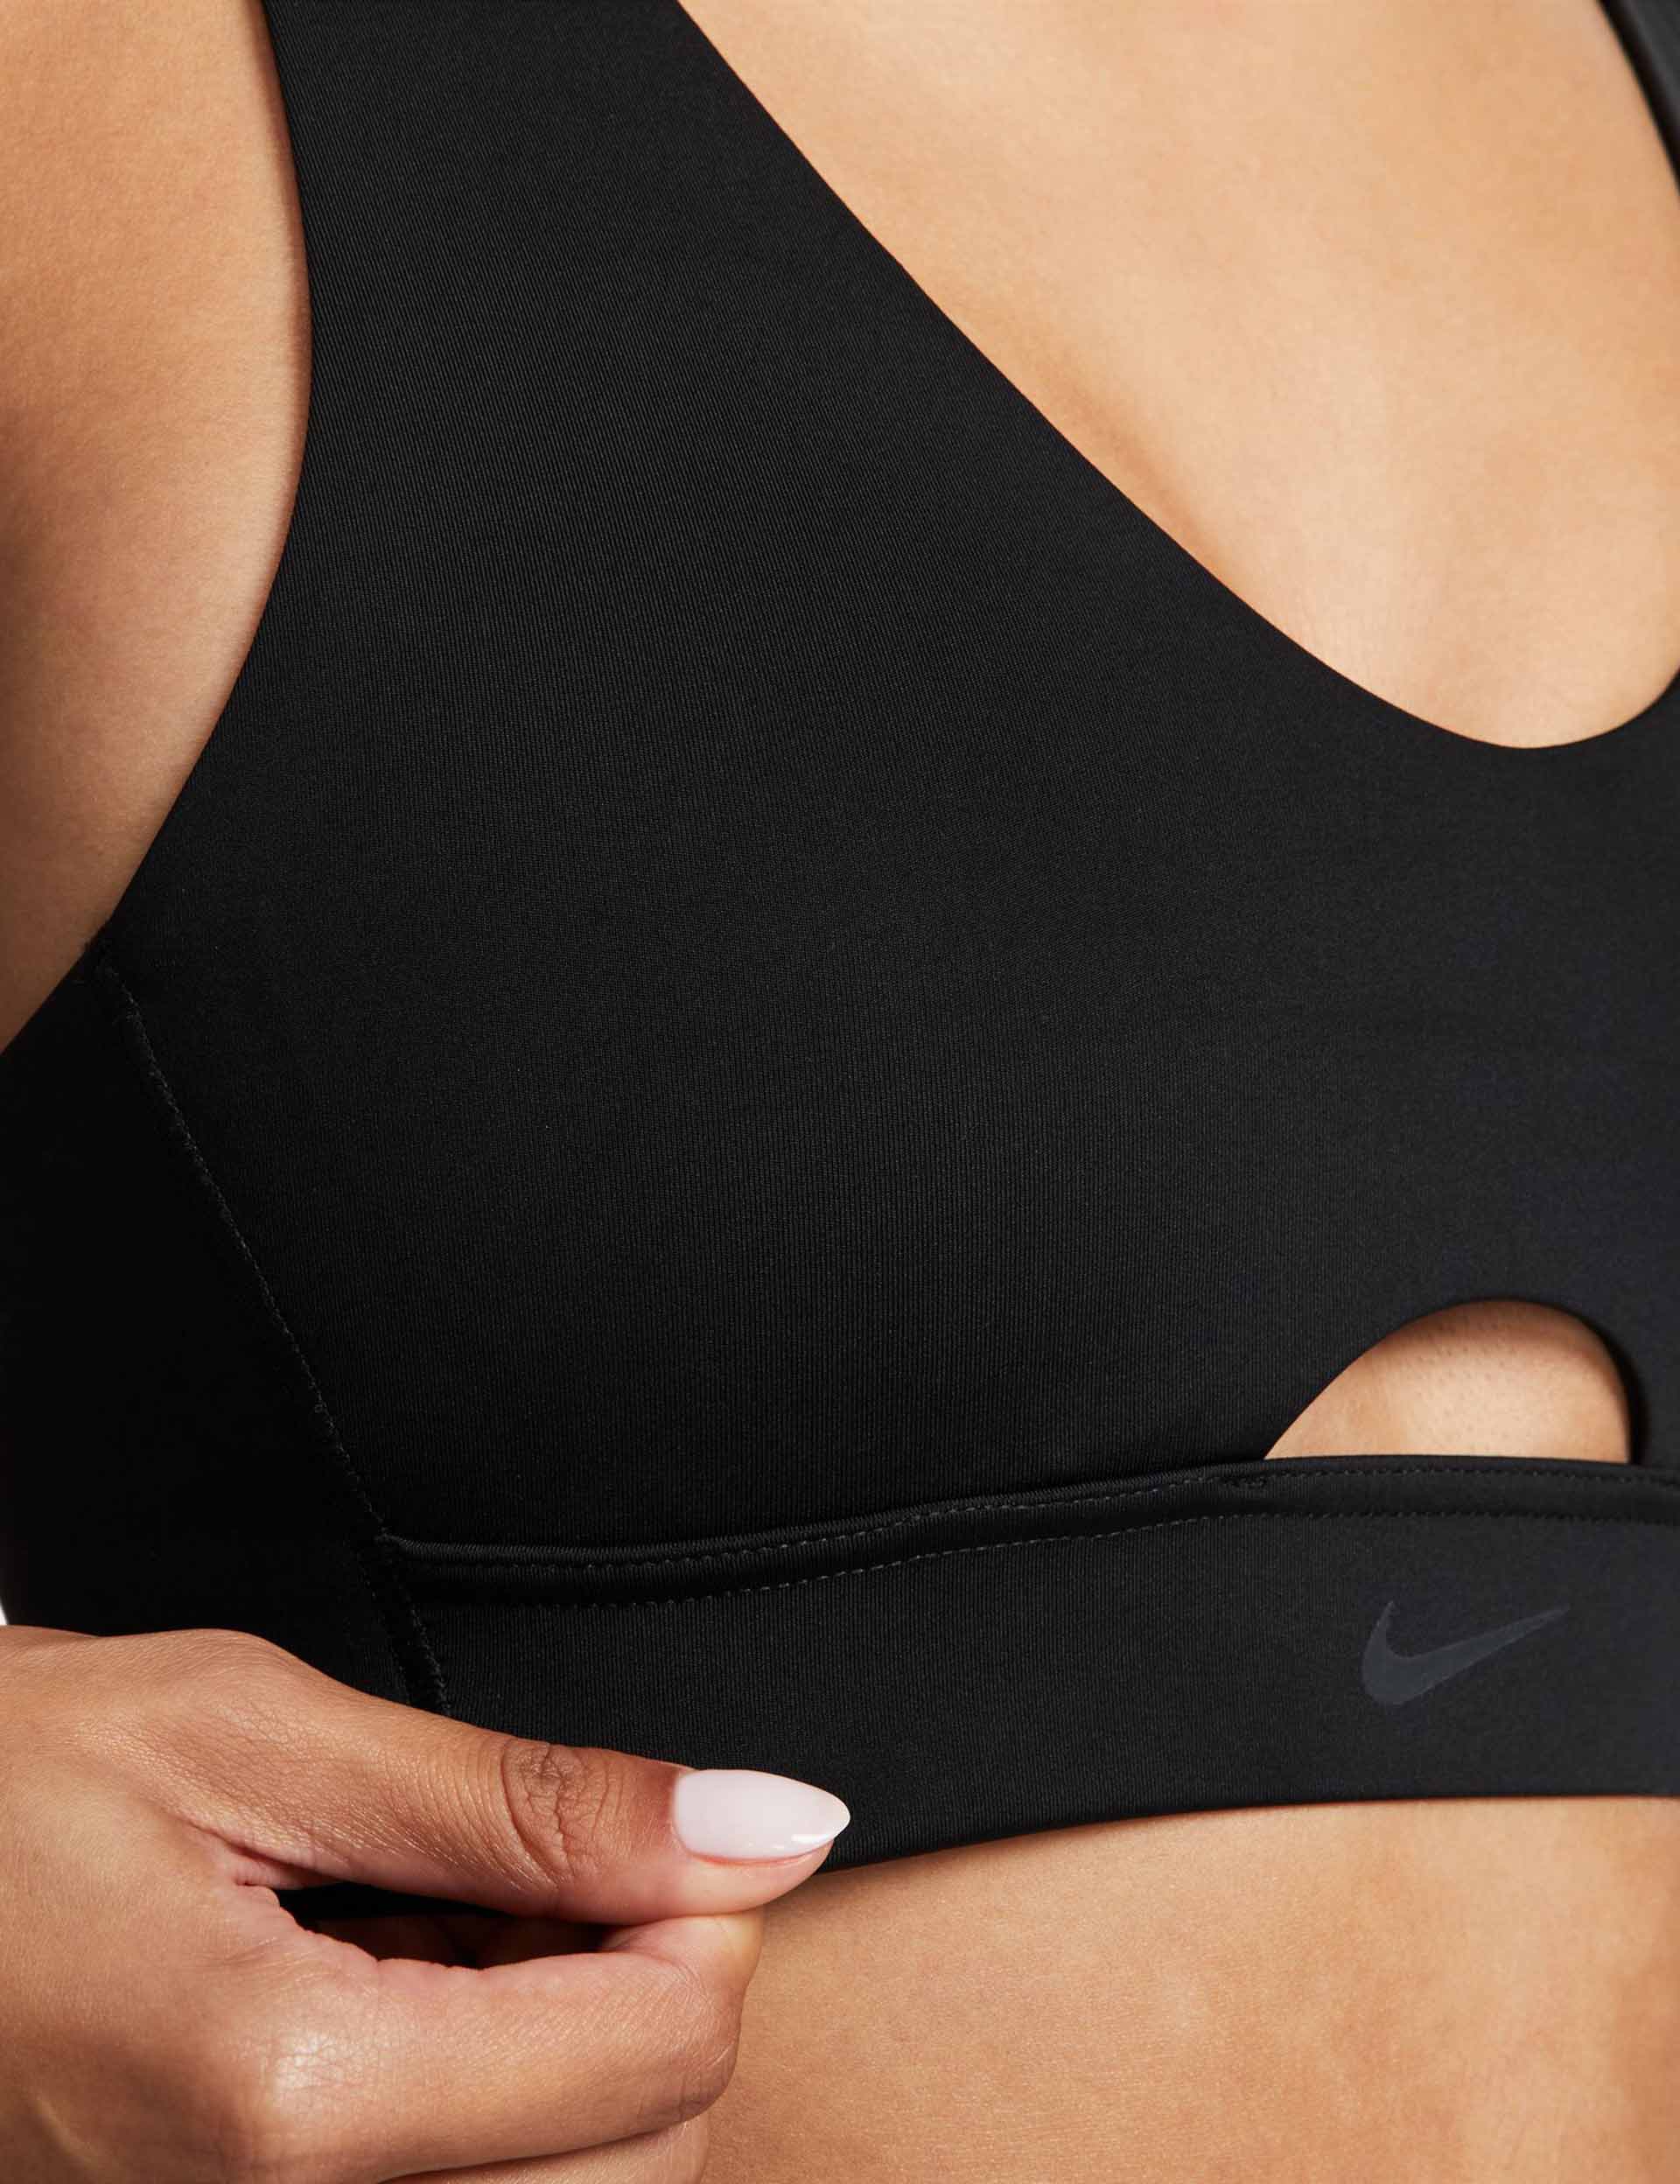 Nike Training Indy Dri-Fit plunge cutout medium support sports bra